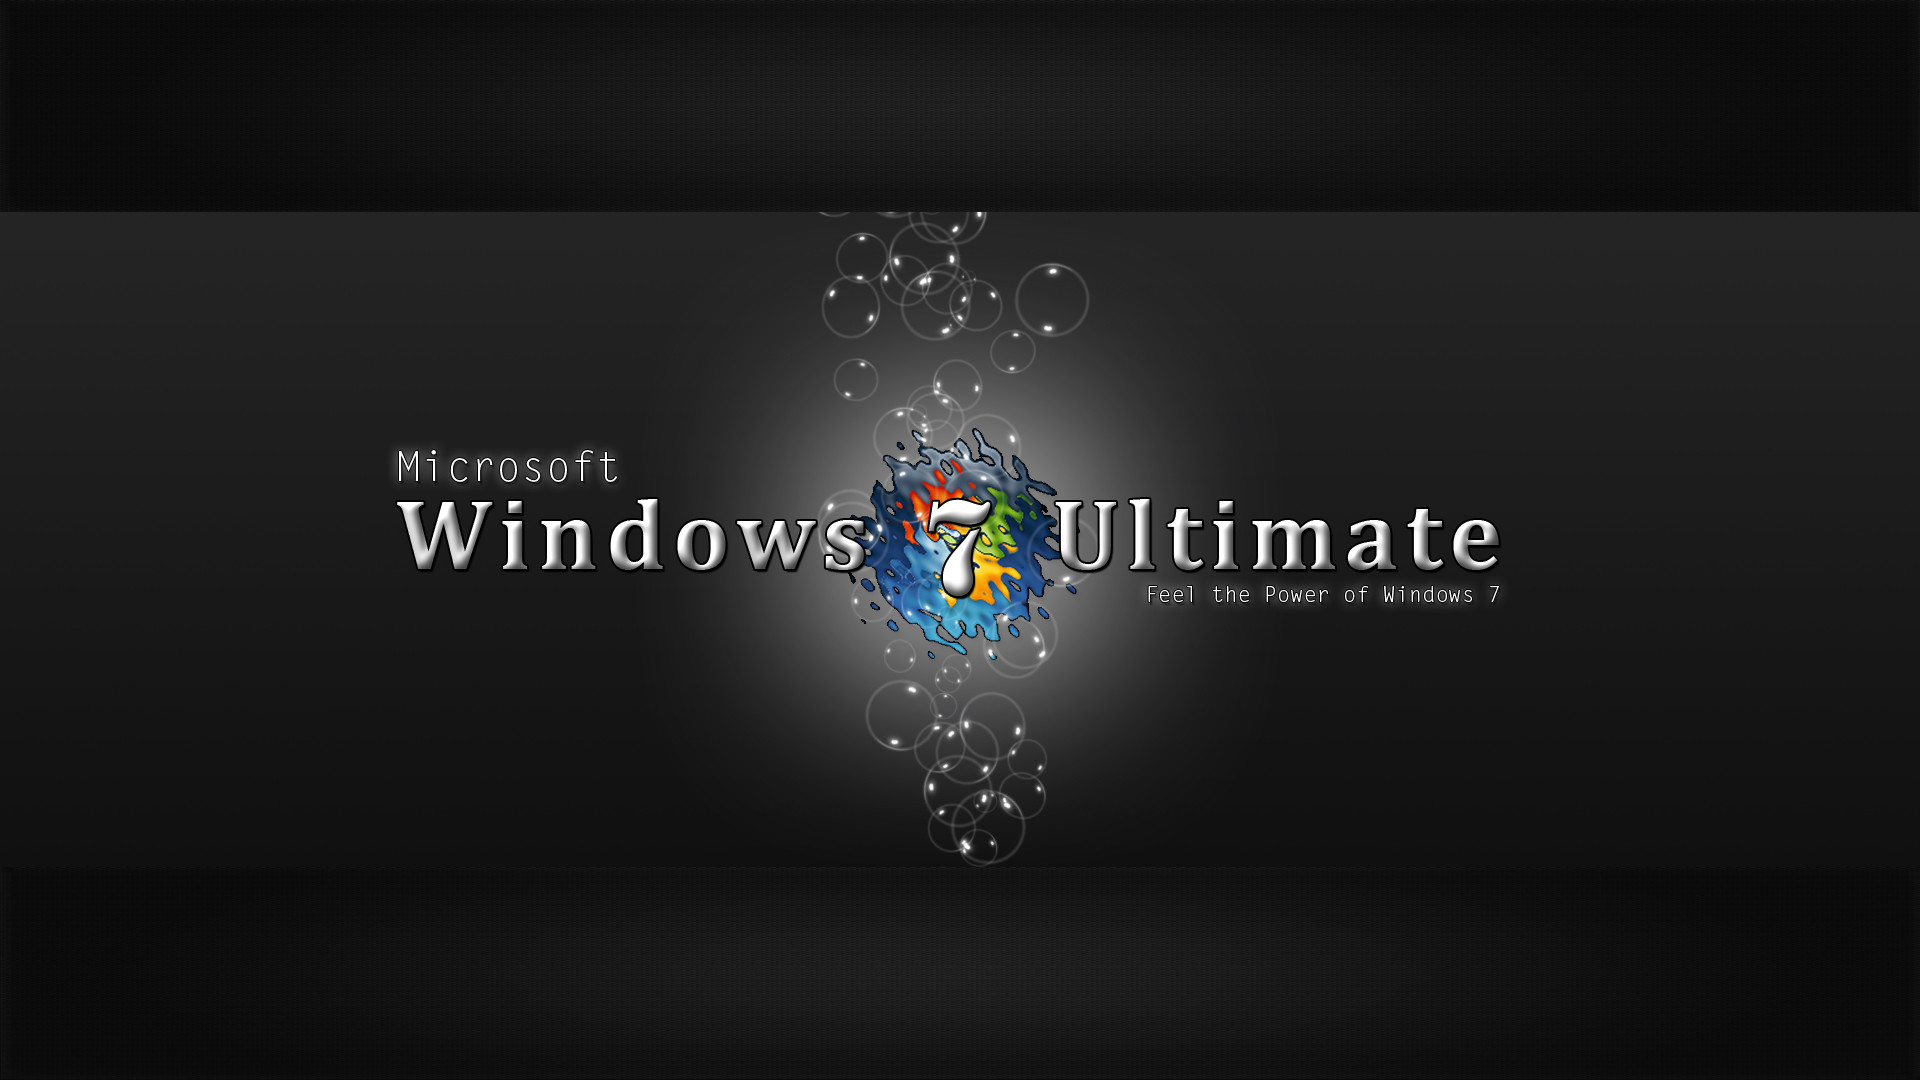 1920x1080 Windows 7 Ultimate Wallpaper Hd ...